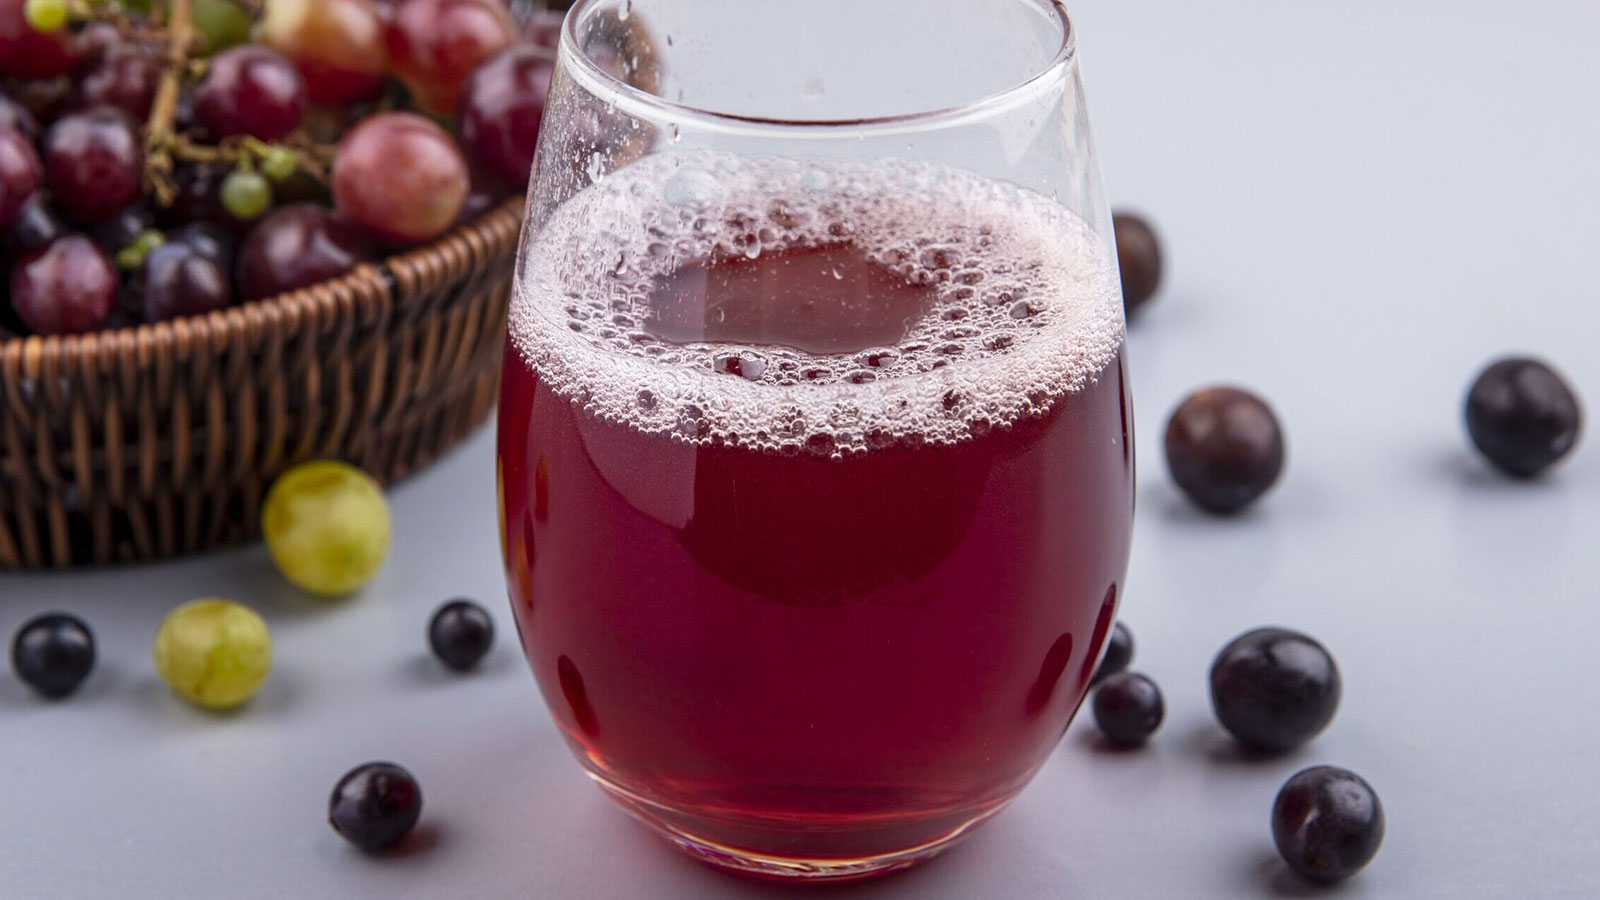 Benefit of juicing grapes